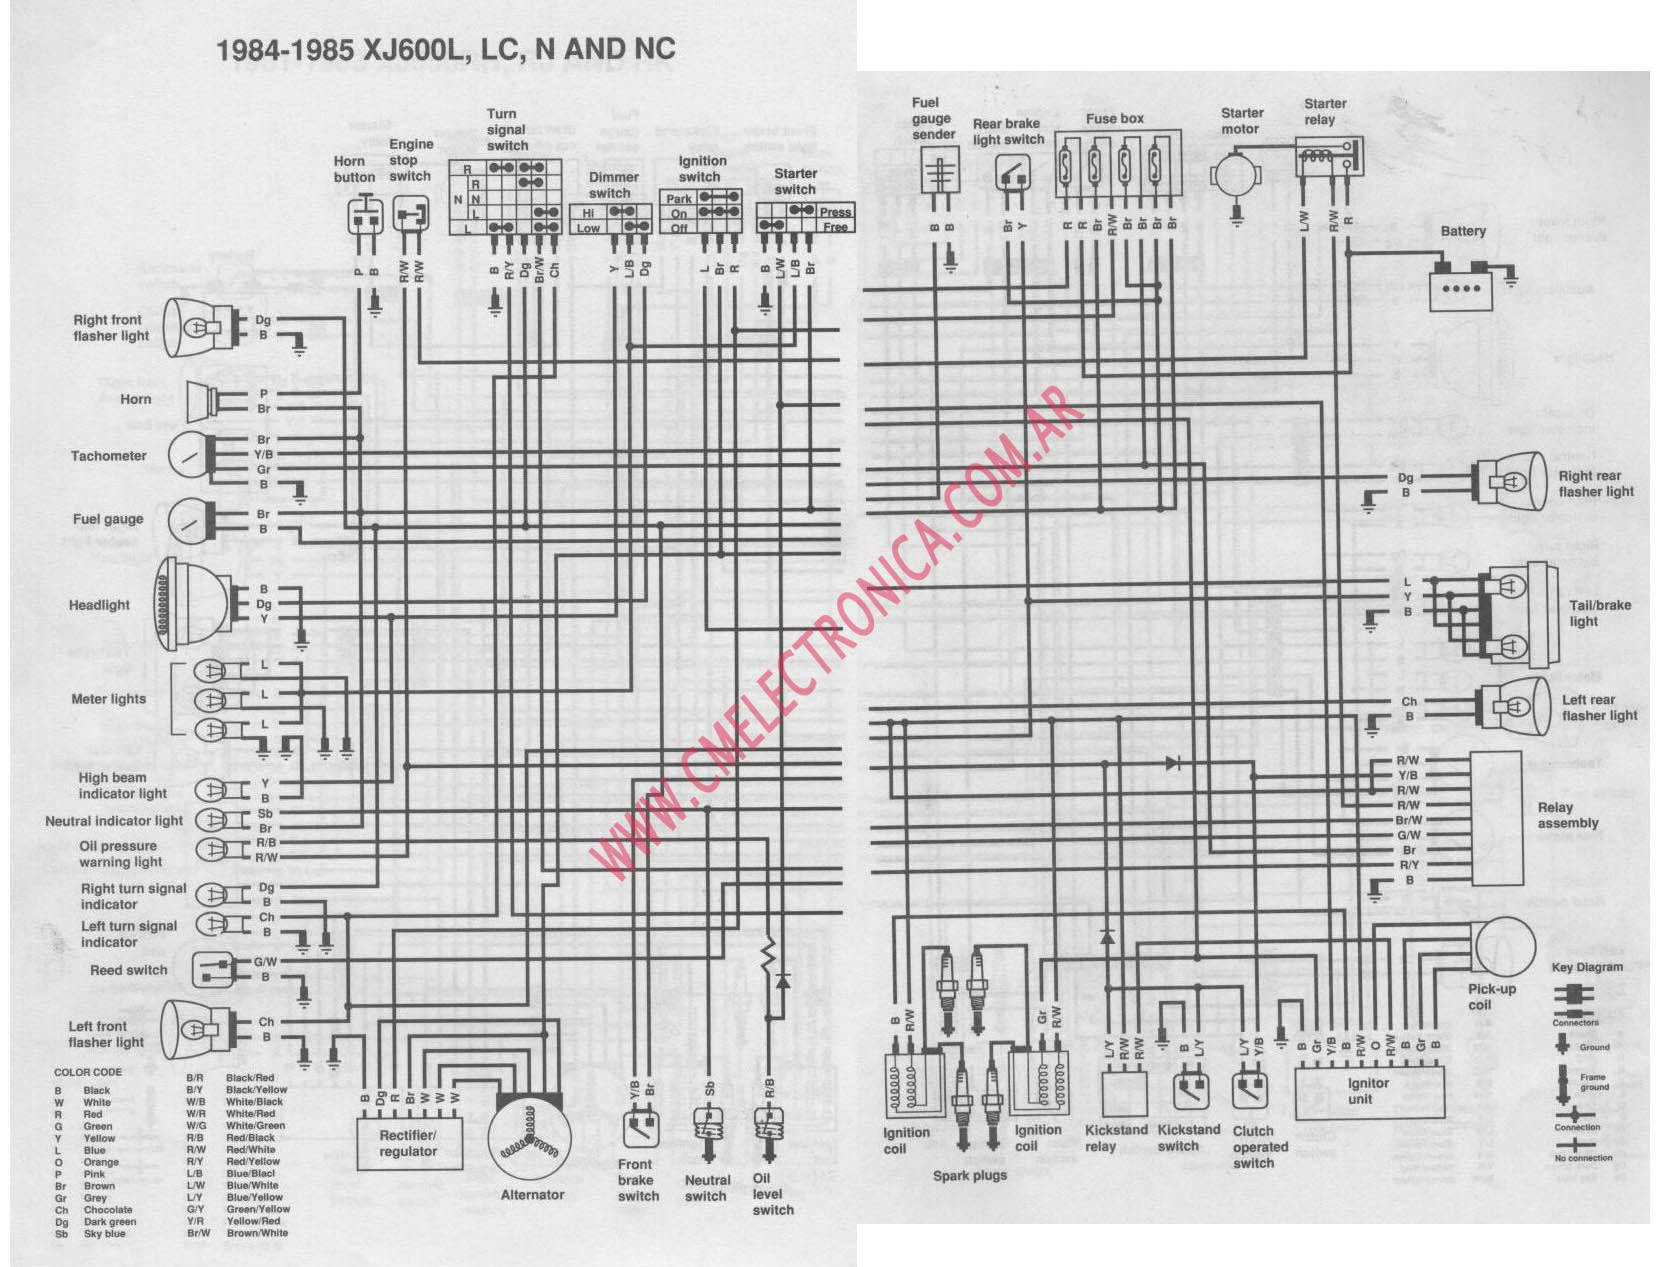 99 Yamaha Yfm600 Wiring Diagram Wiring Diagram Networks